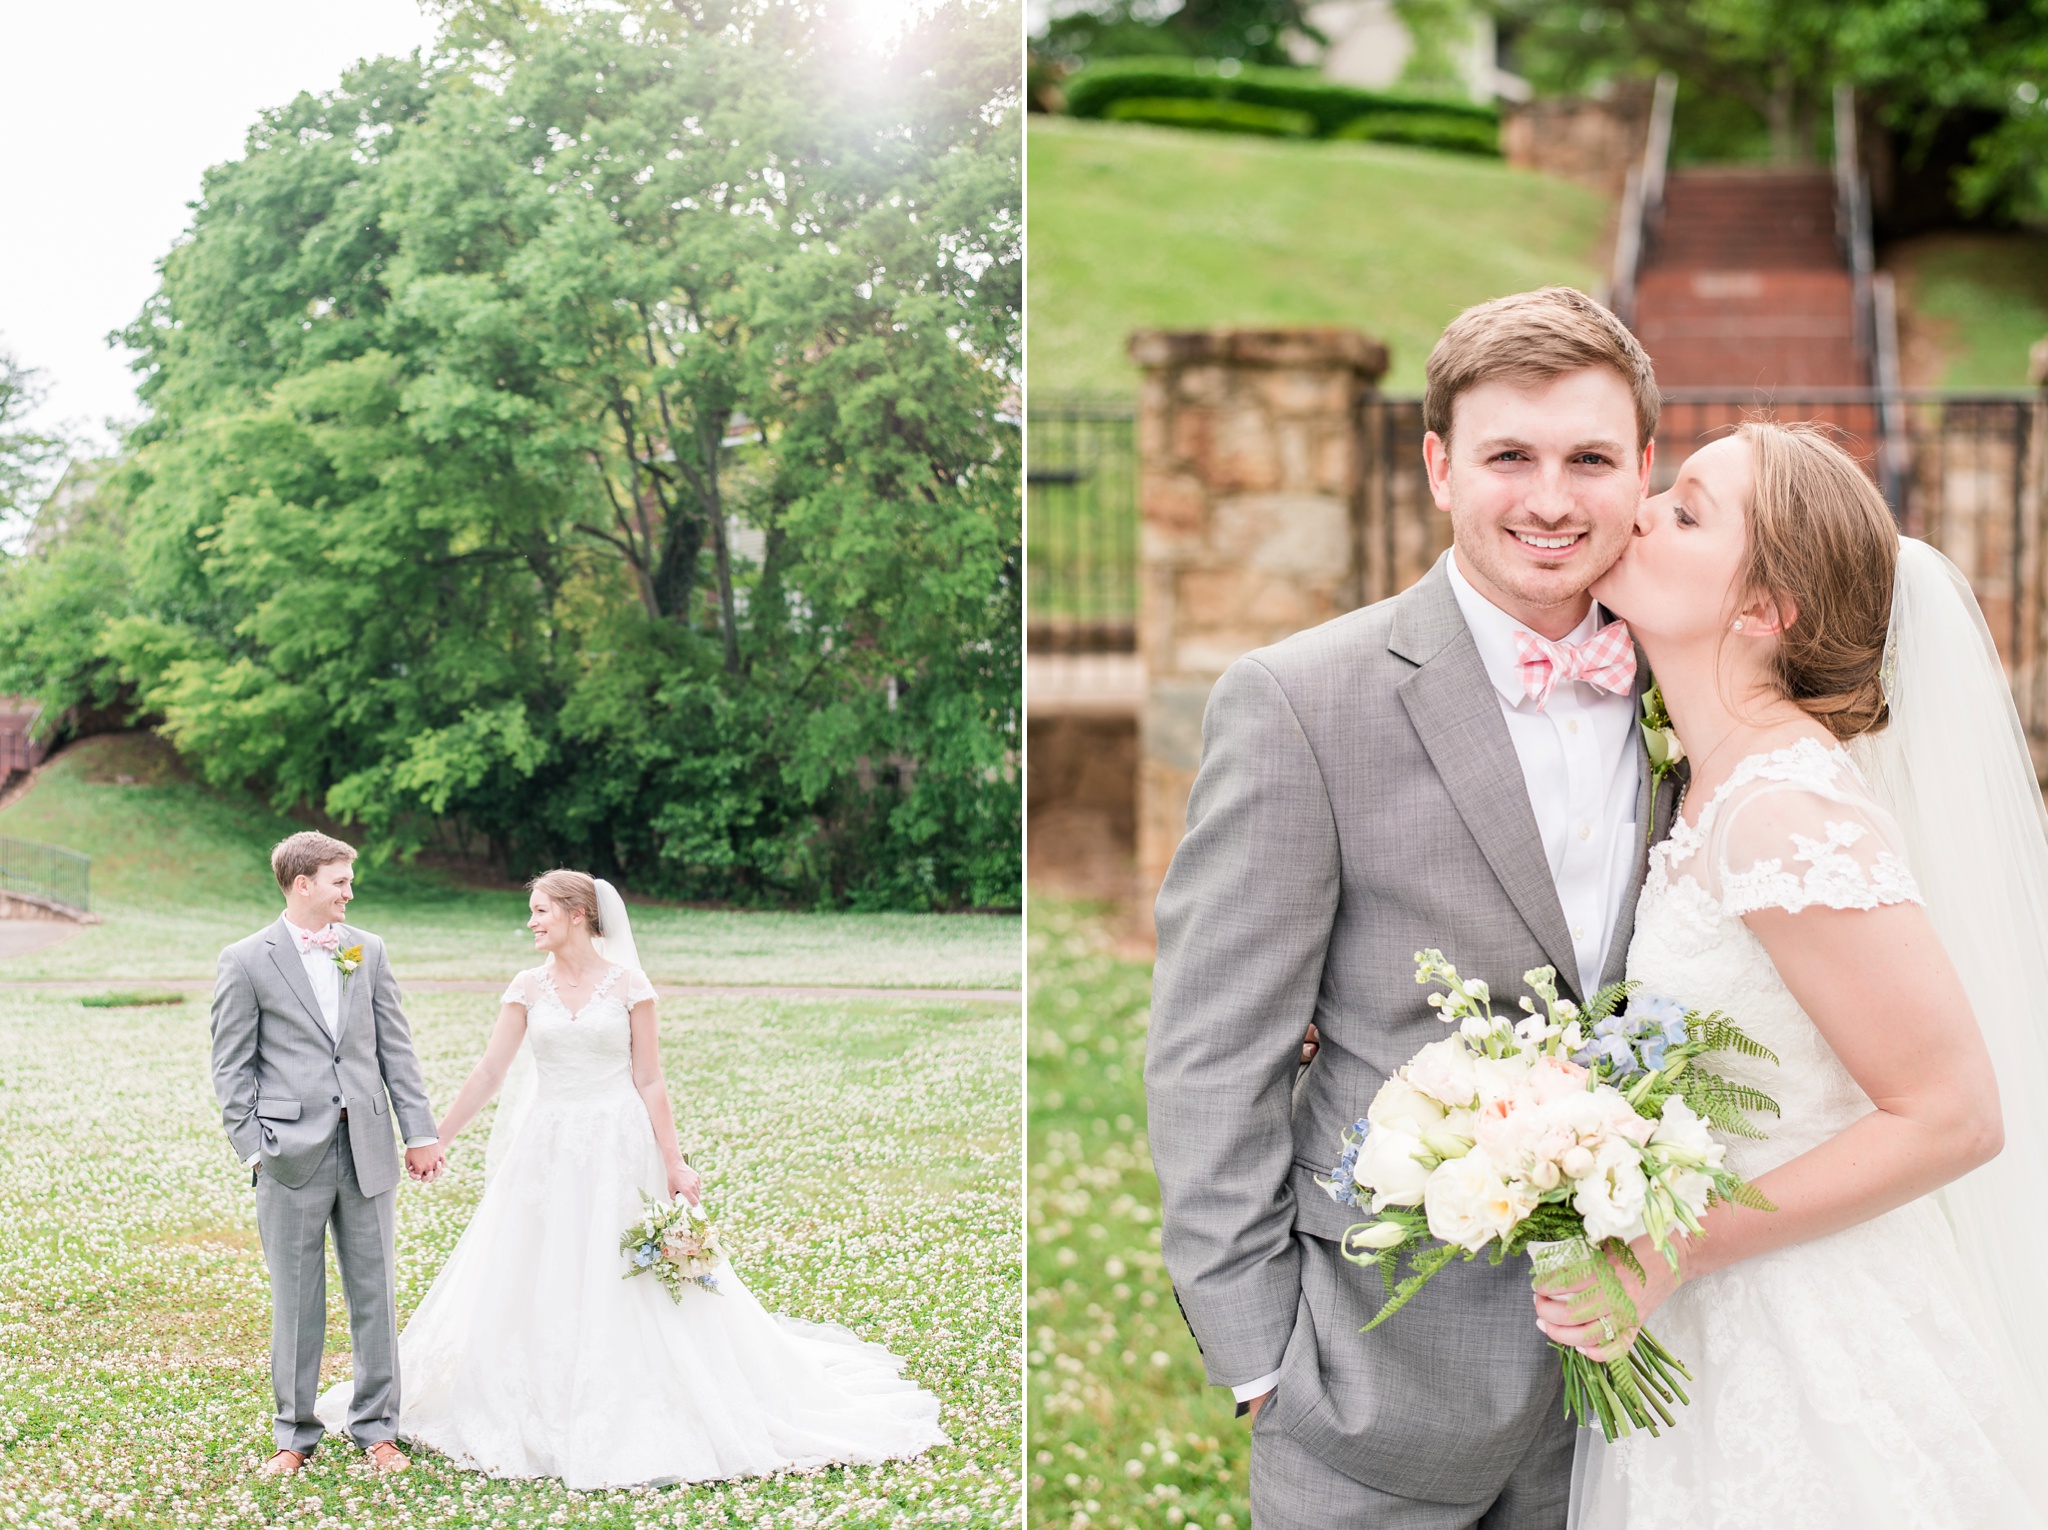 Briarwood Caroline House Blush Spring Garden Wedding | Birmingham Alabama Wedding Photographers_0050.jpg